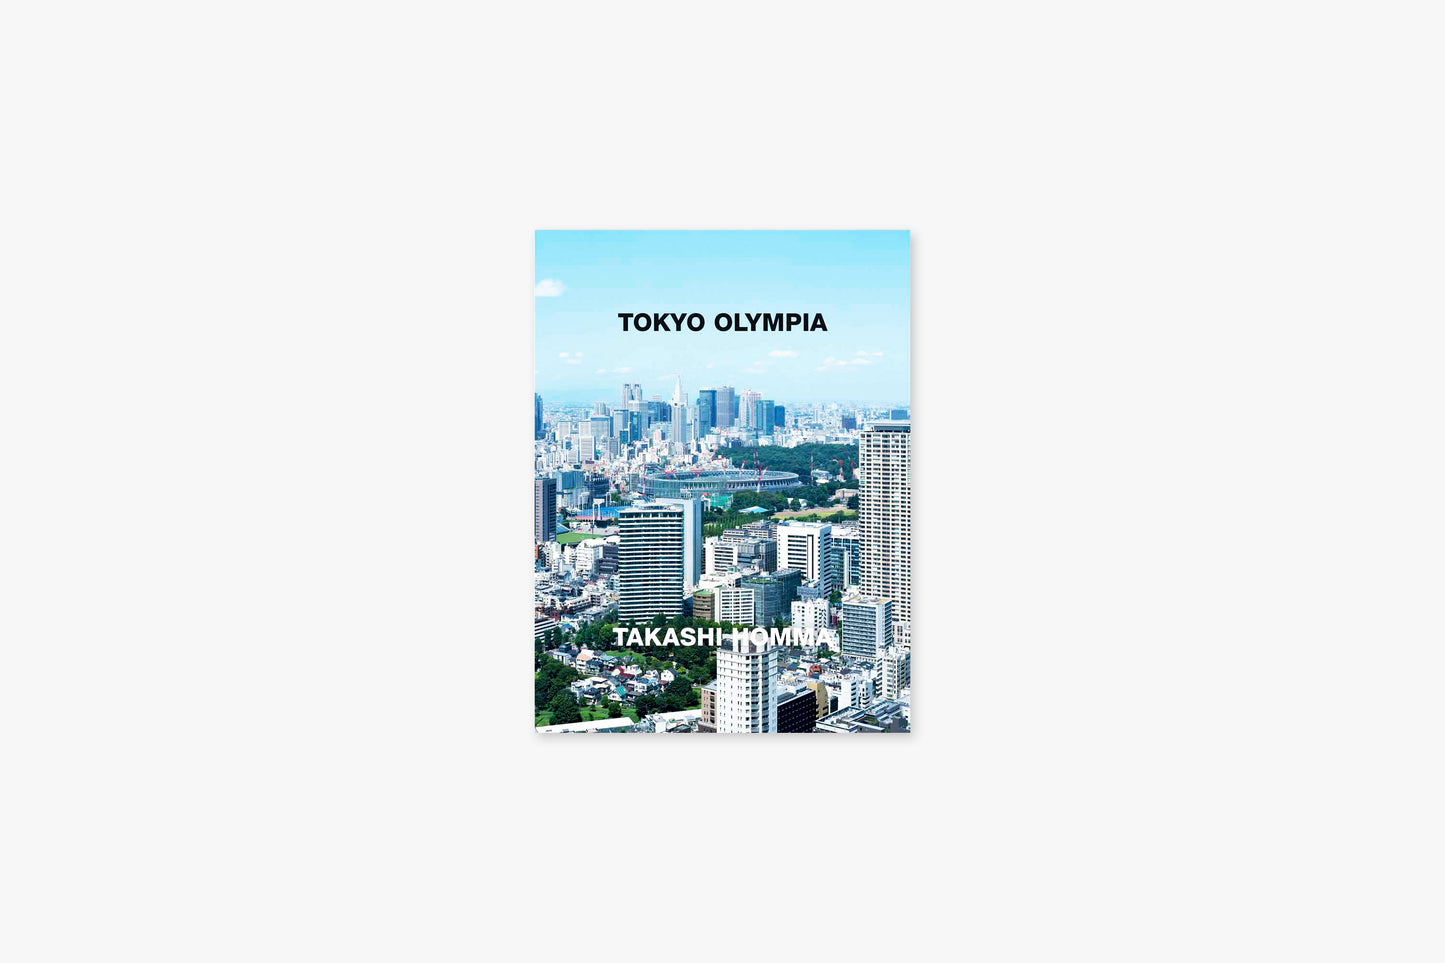 Tokyo Olympia